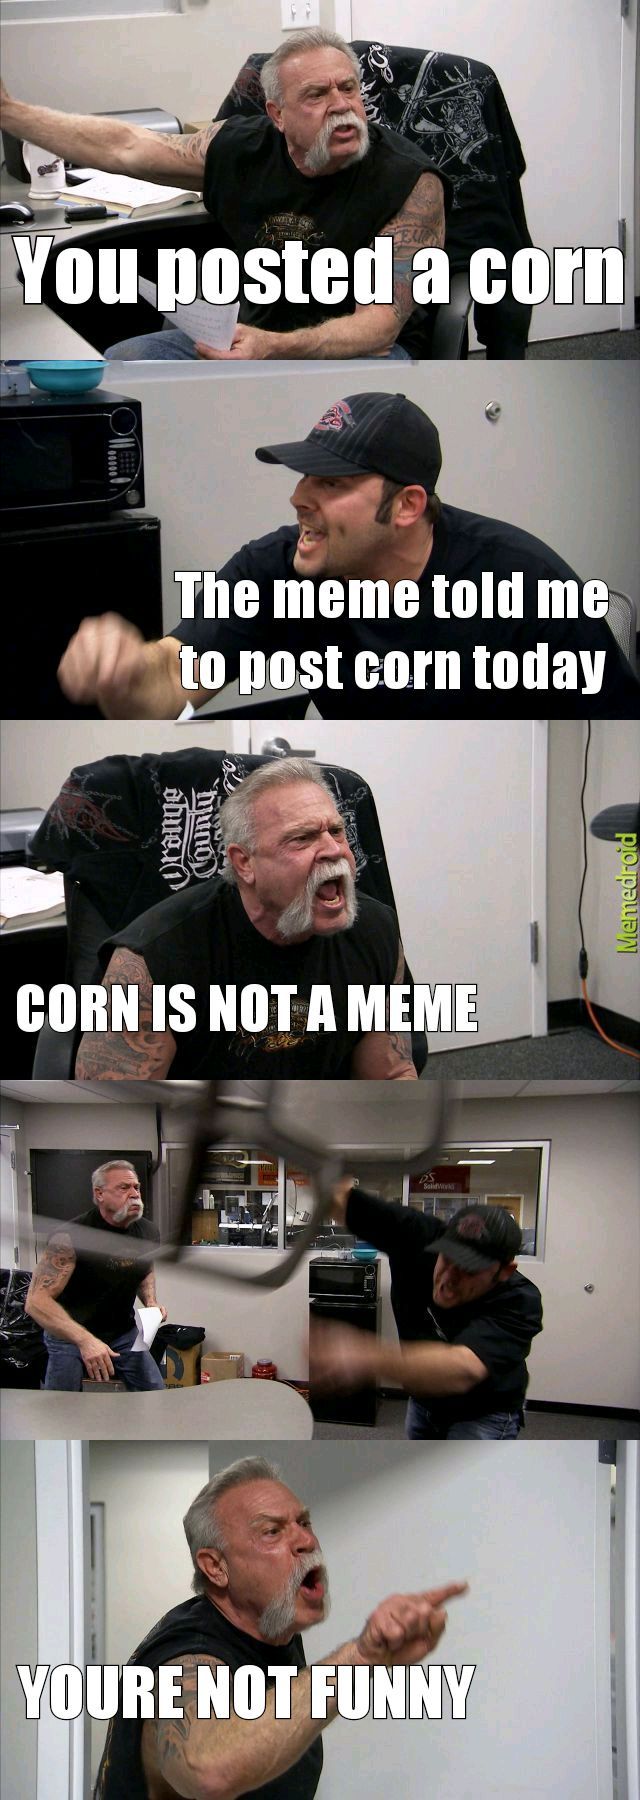 Corn is not funny. Be reasonable people. - meme